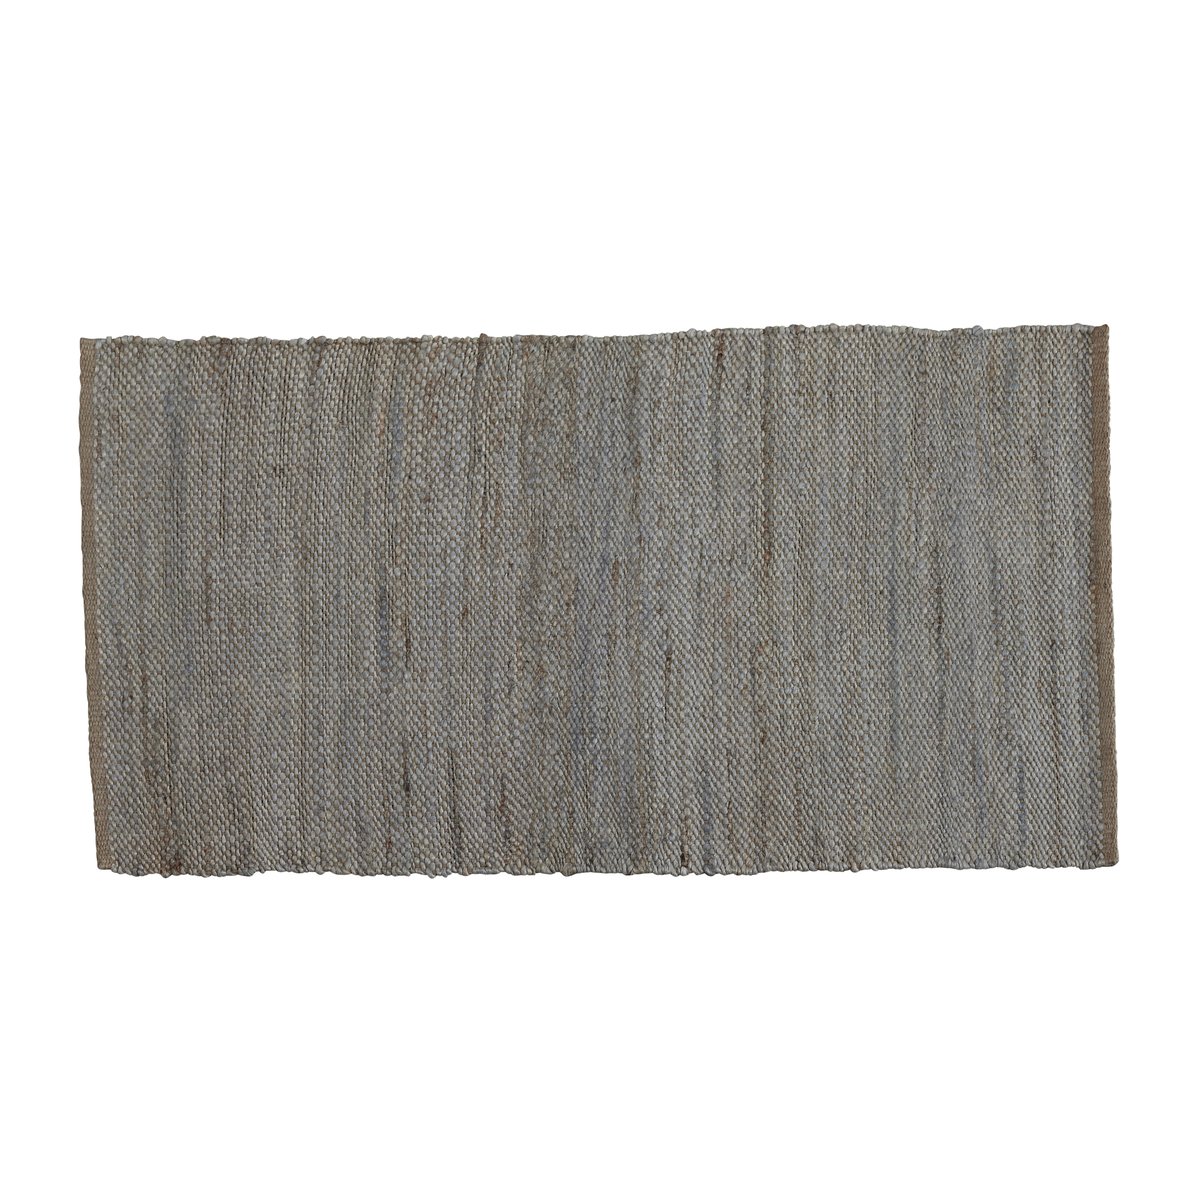 Lene Bjerre Strissie vloerkleed 80x150 cm, grey-nature